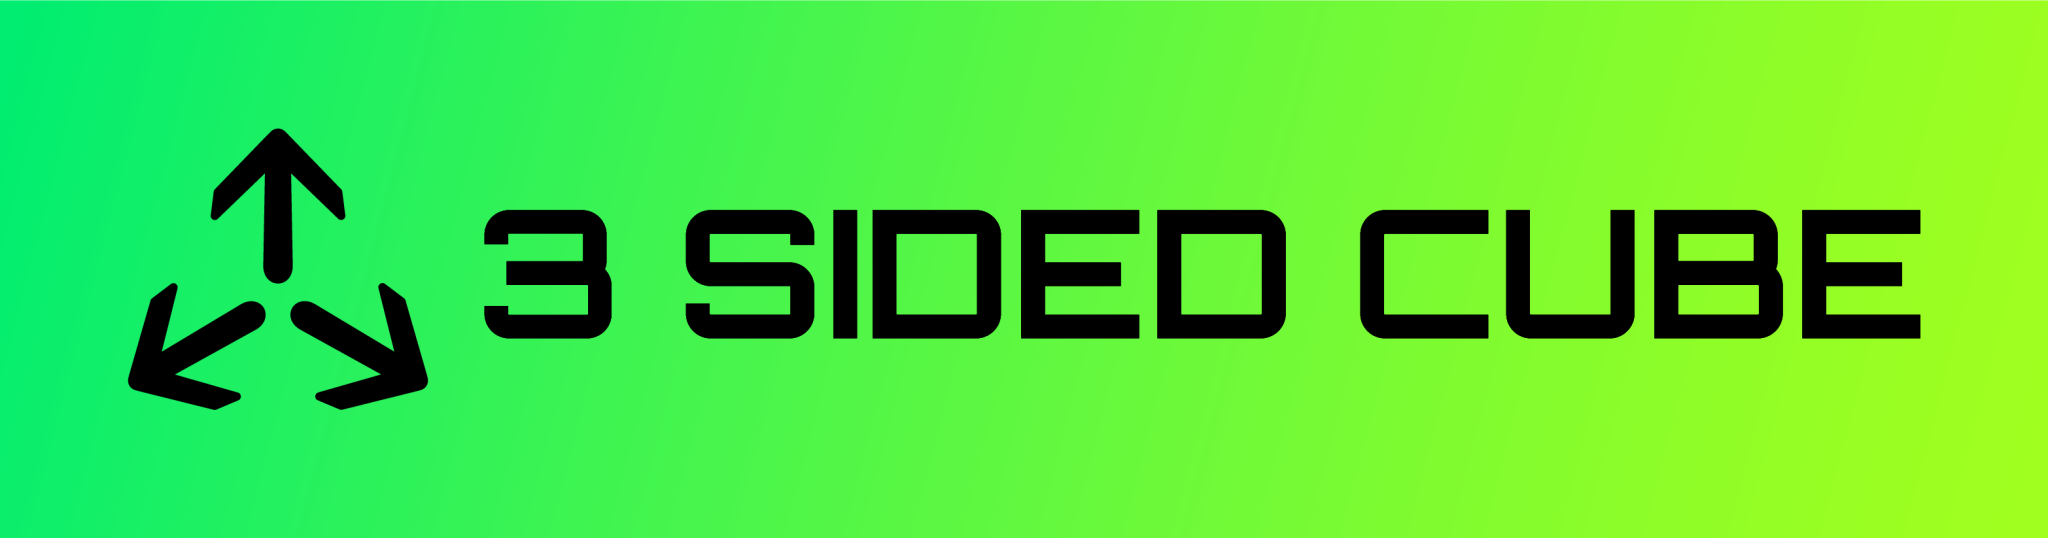 3 Sided Cube Design Ltd